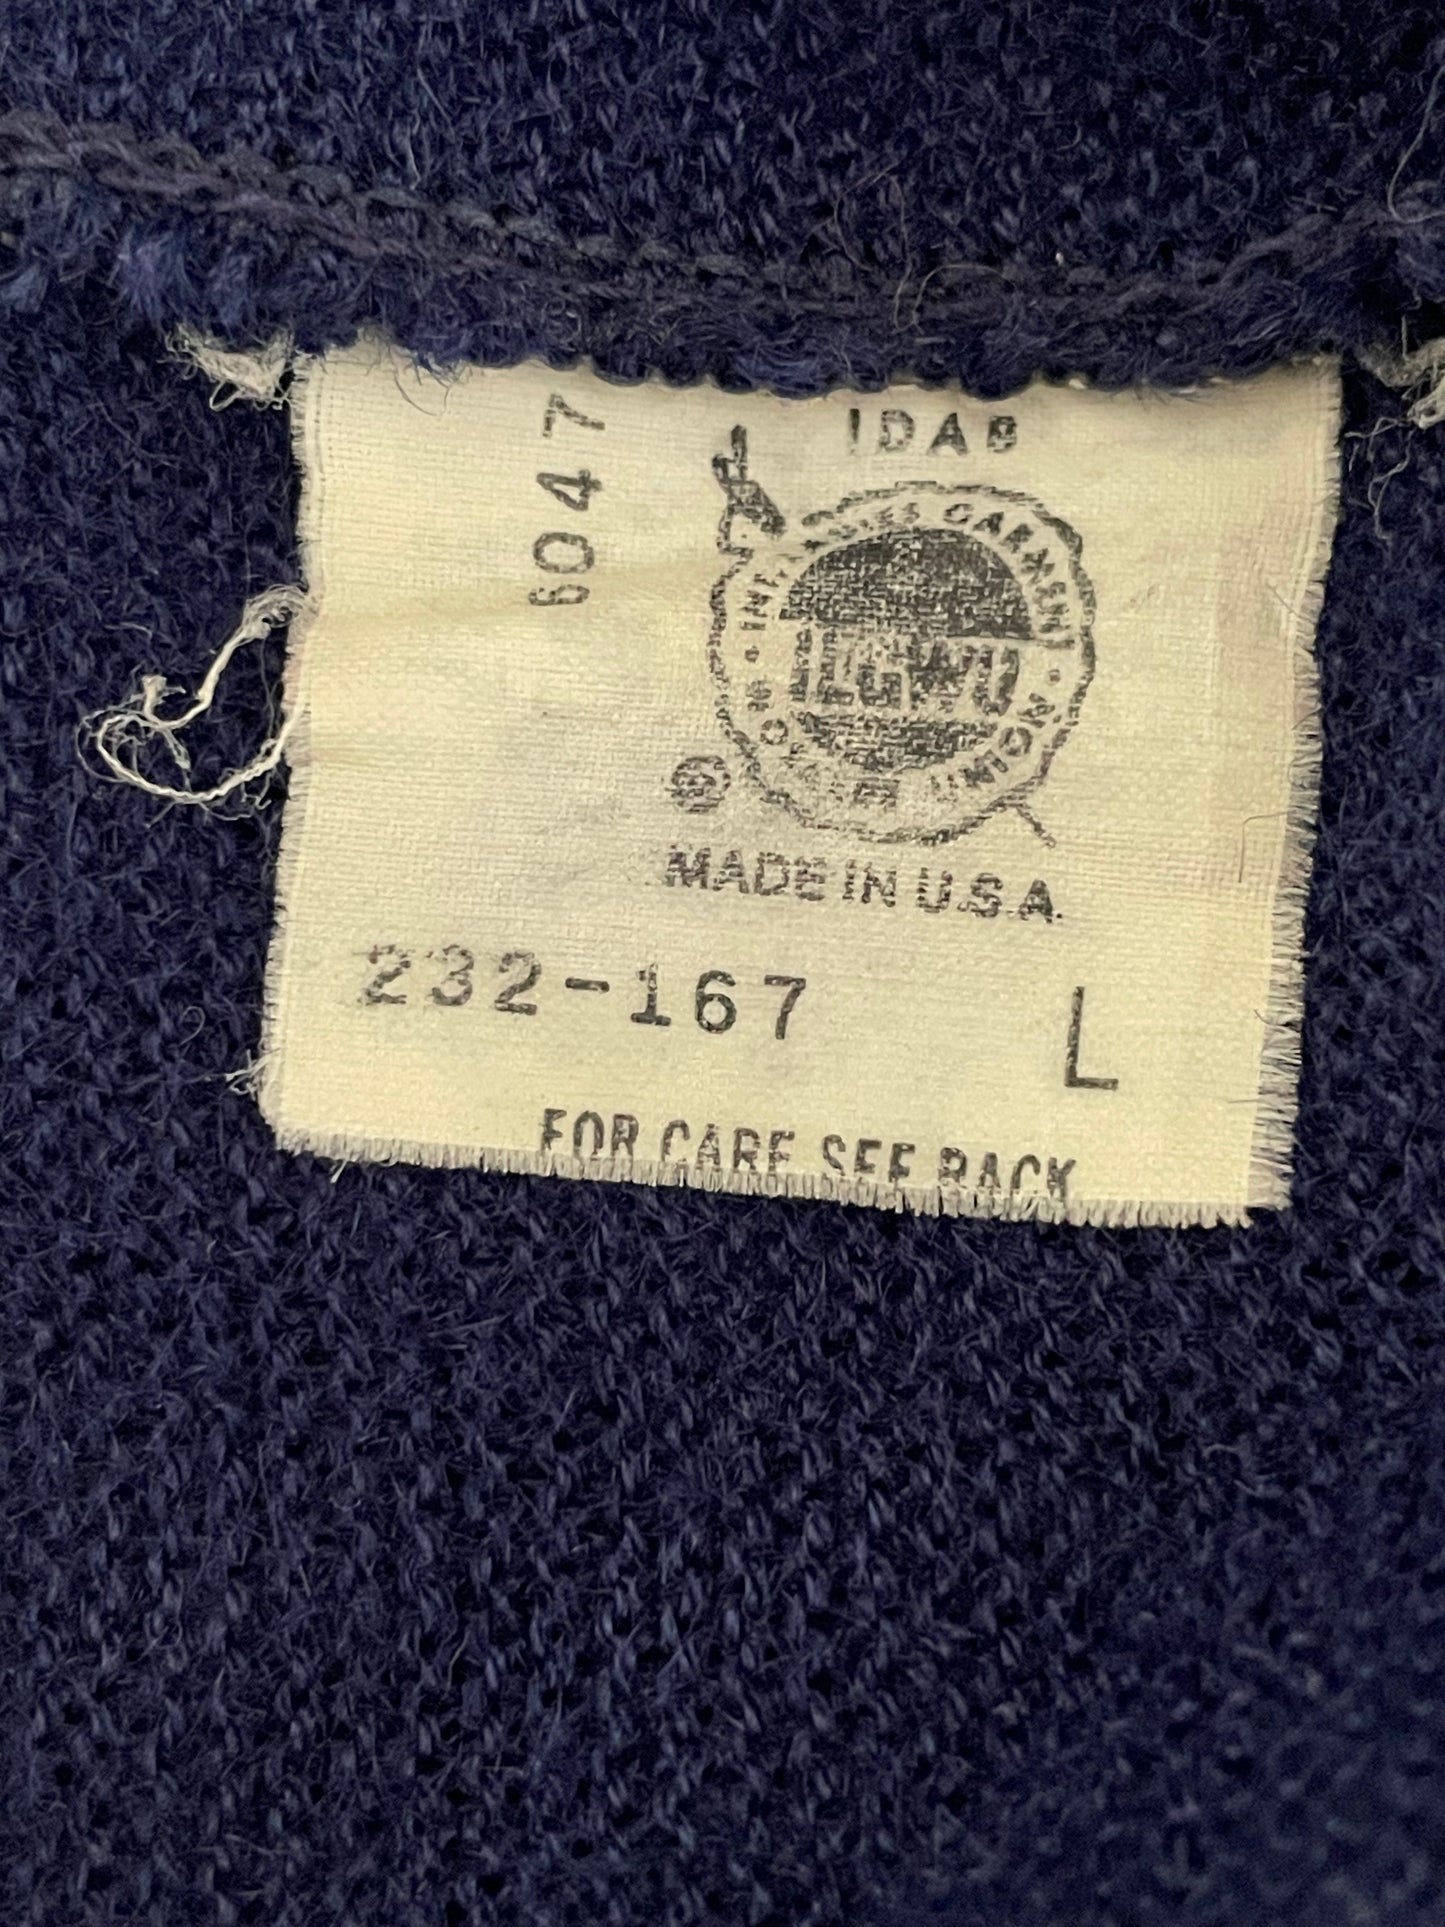 80s Navy Blue Arnold Palmer Sweater